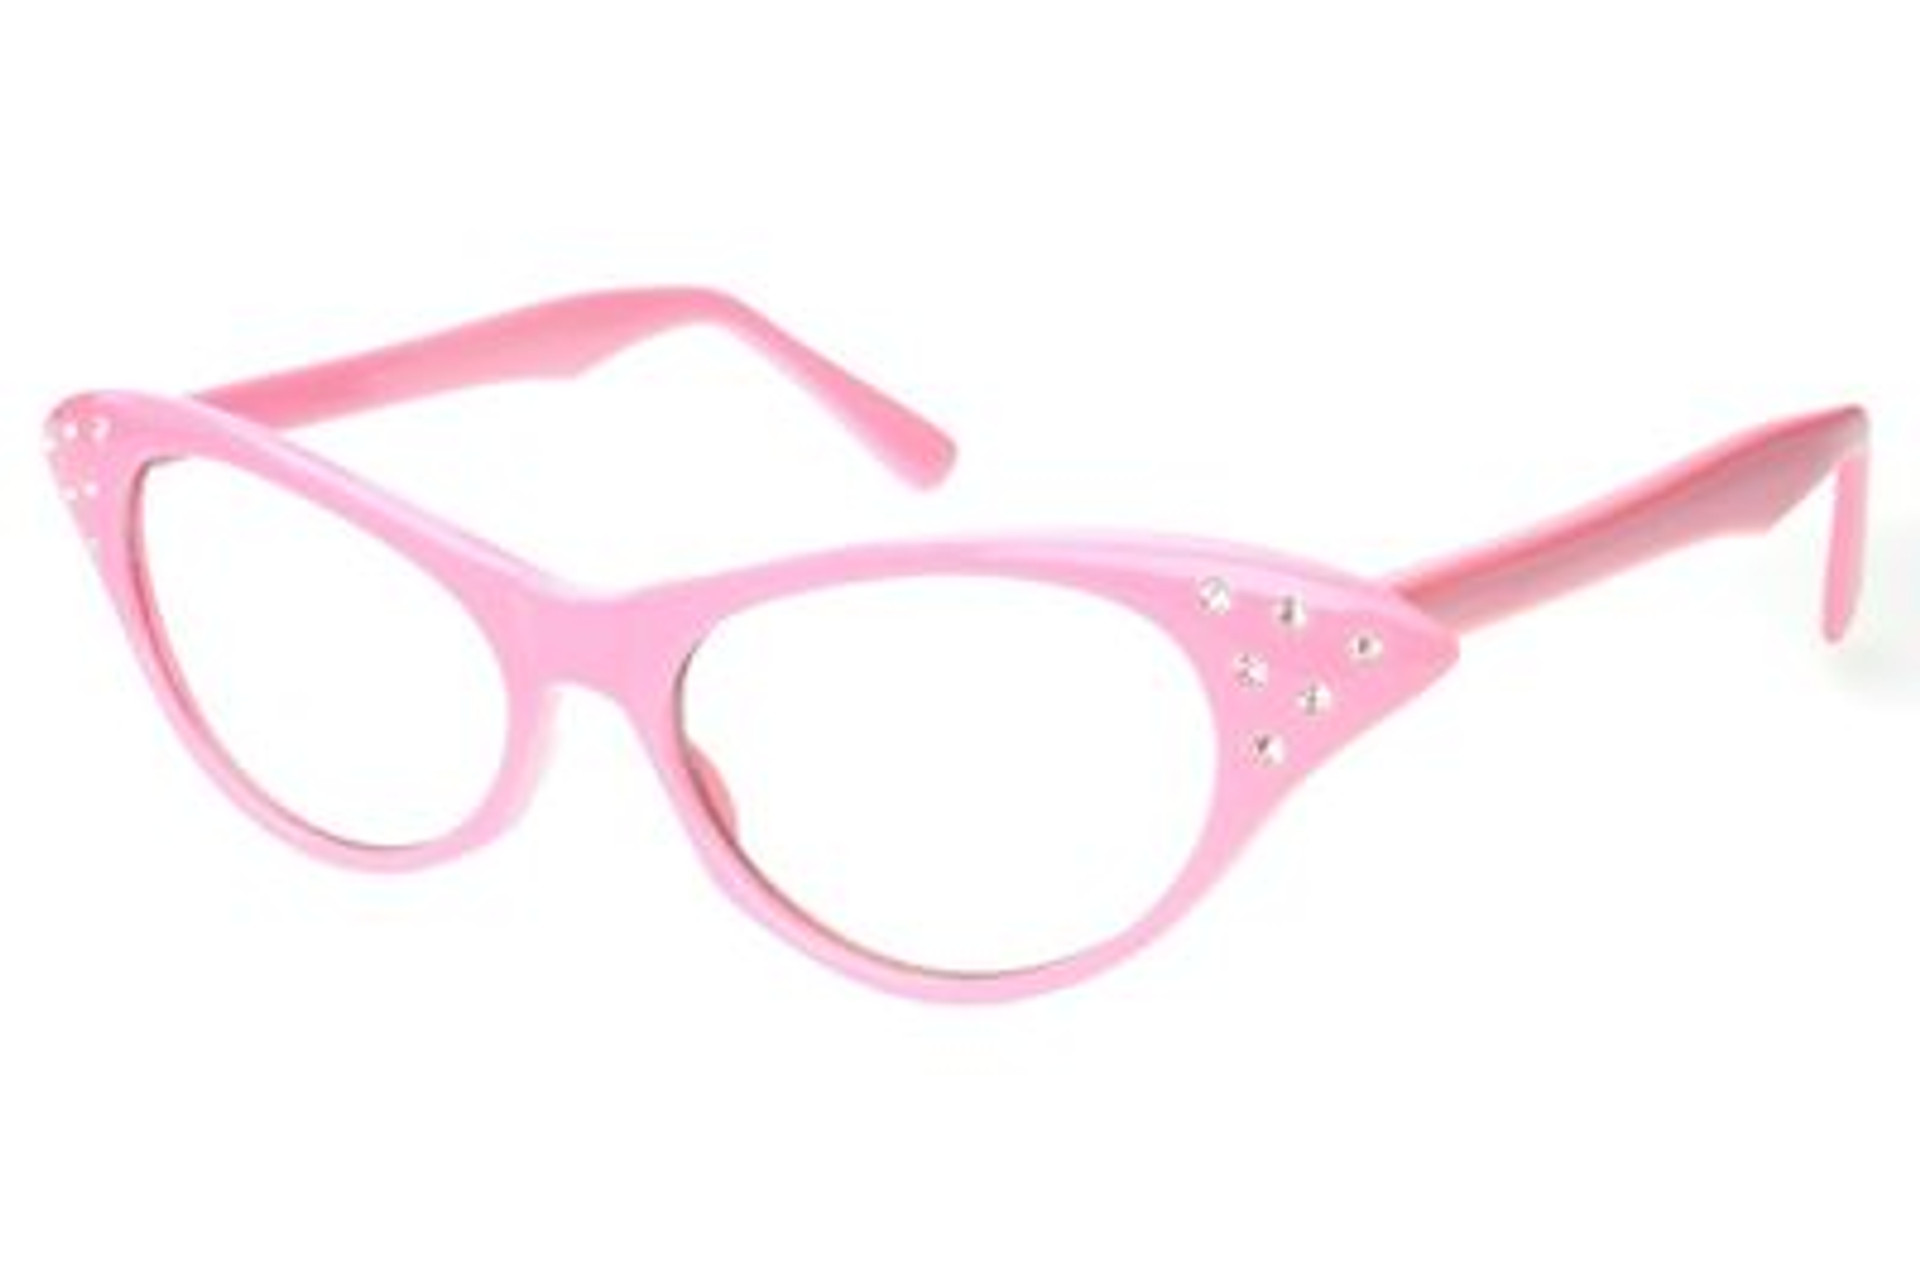 Black Cat Eye Glasses | Discount Black Cat Eye Glasses